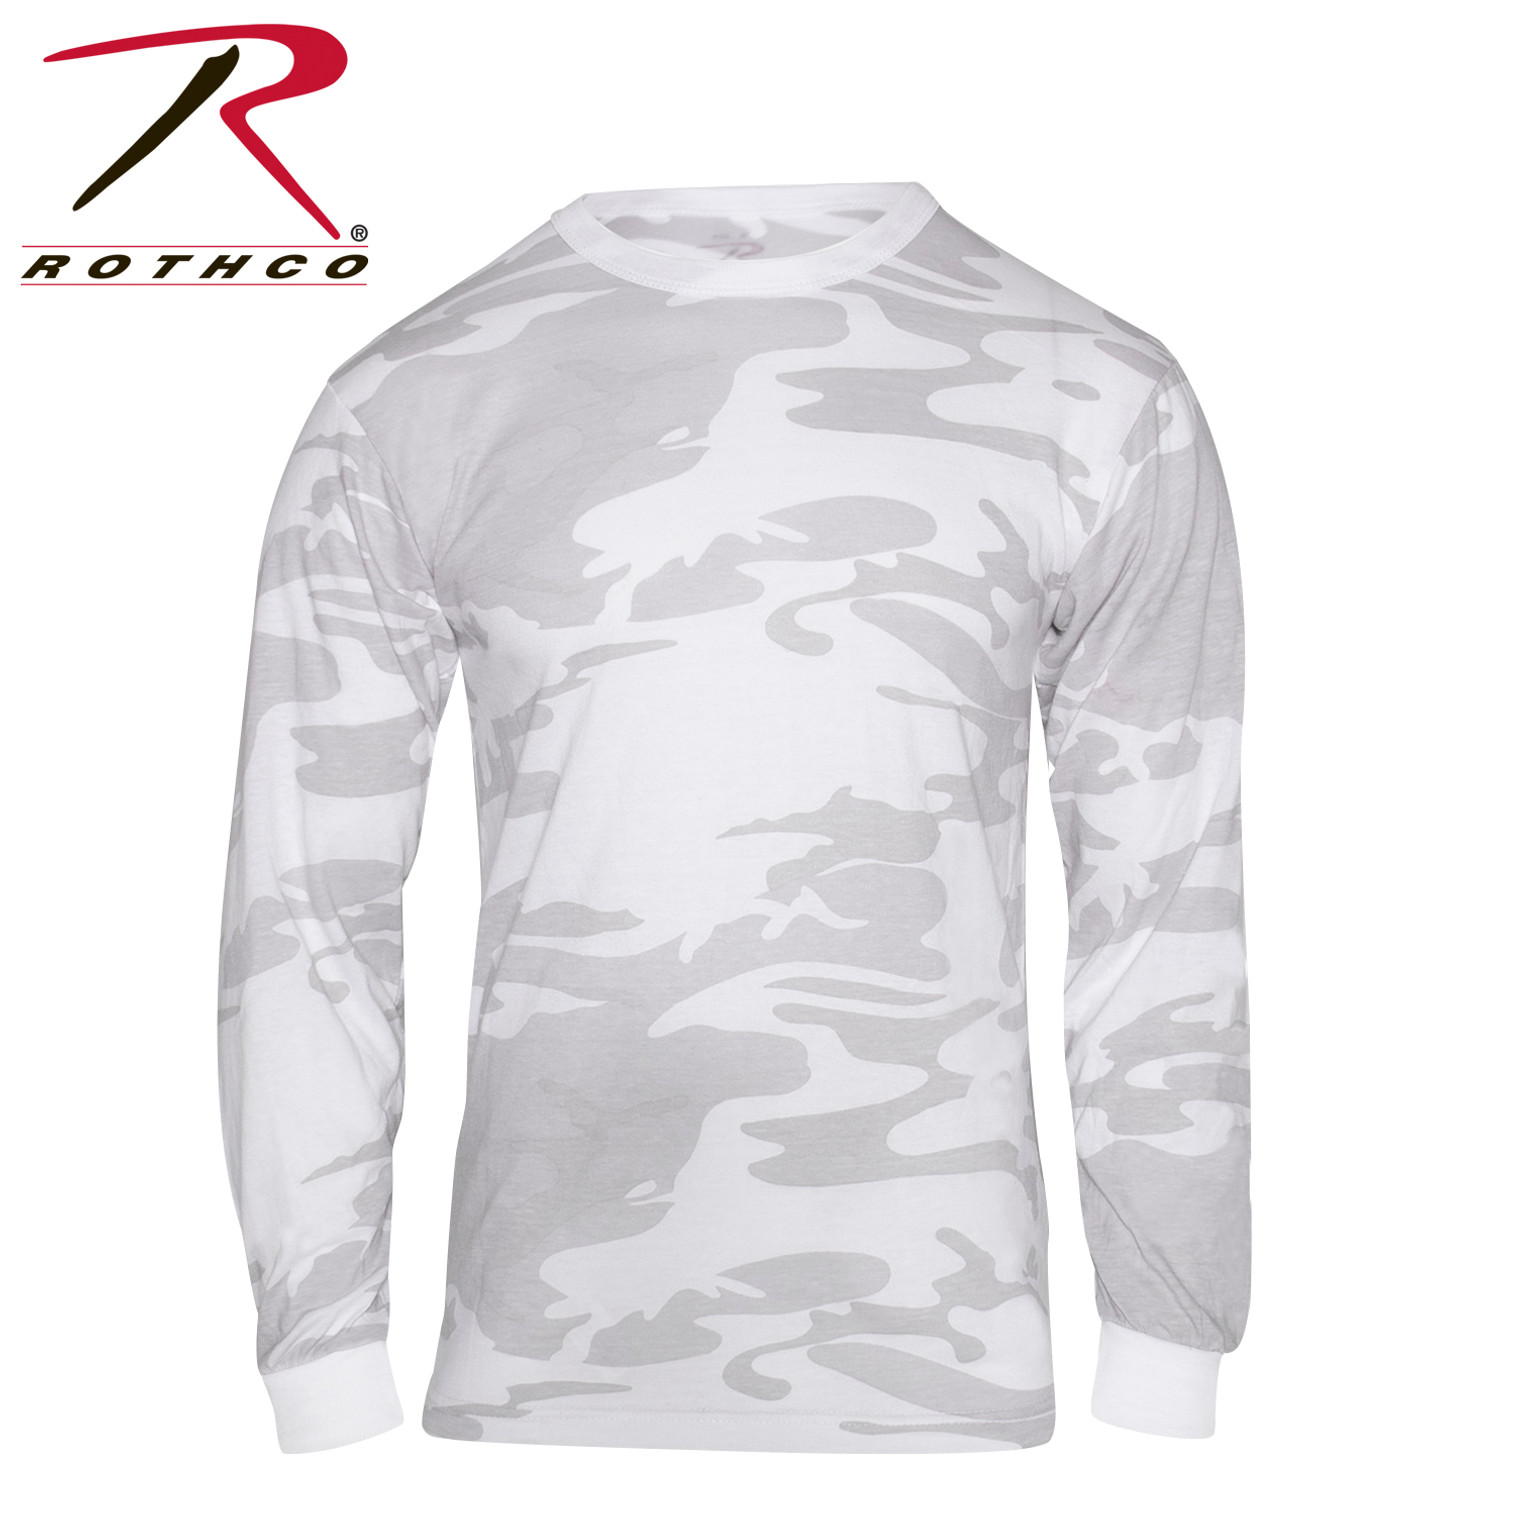 Rothco Long Sleeve Colored Camo T-Shirt - White Camo